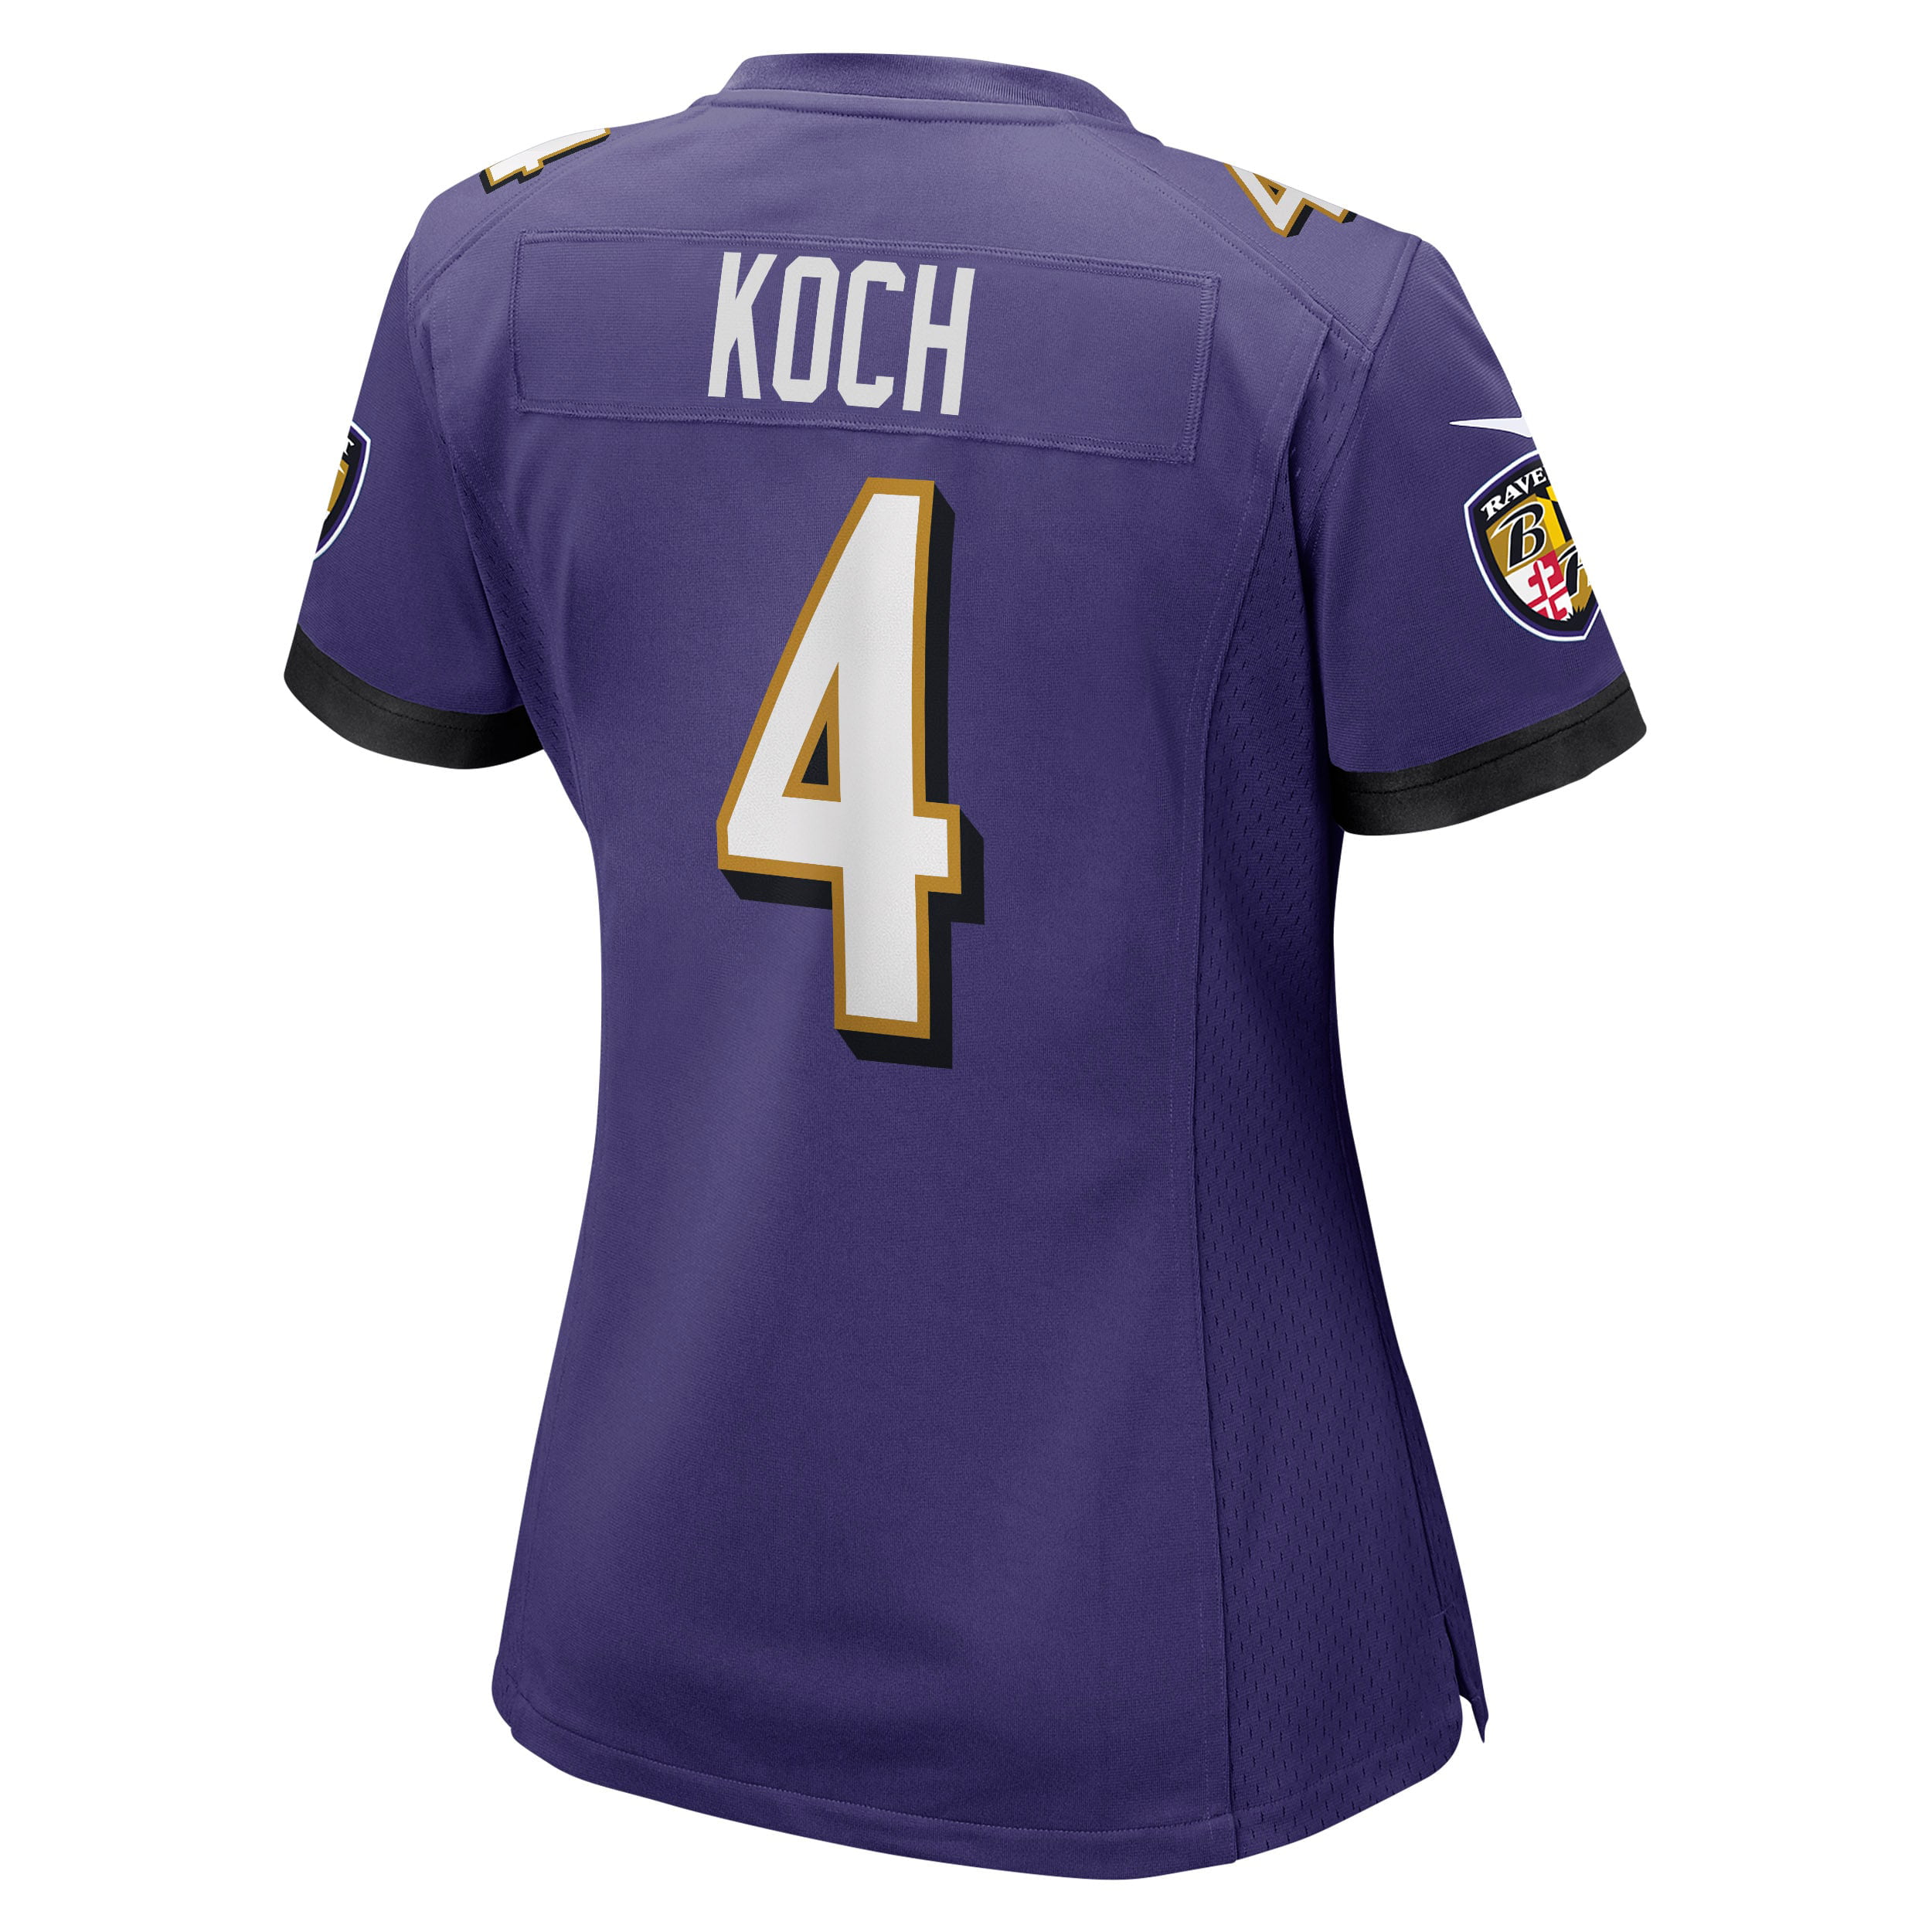 Sam Koch Baltimore Ravens Nike Women's Game Jersey - Purple